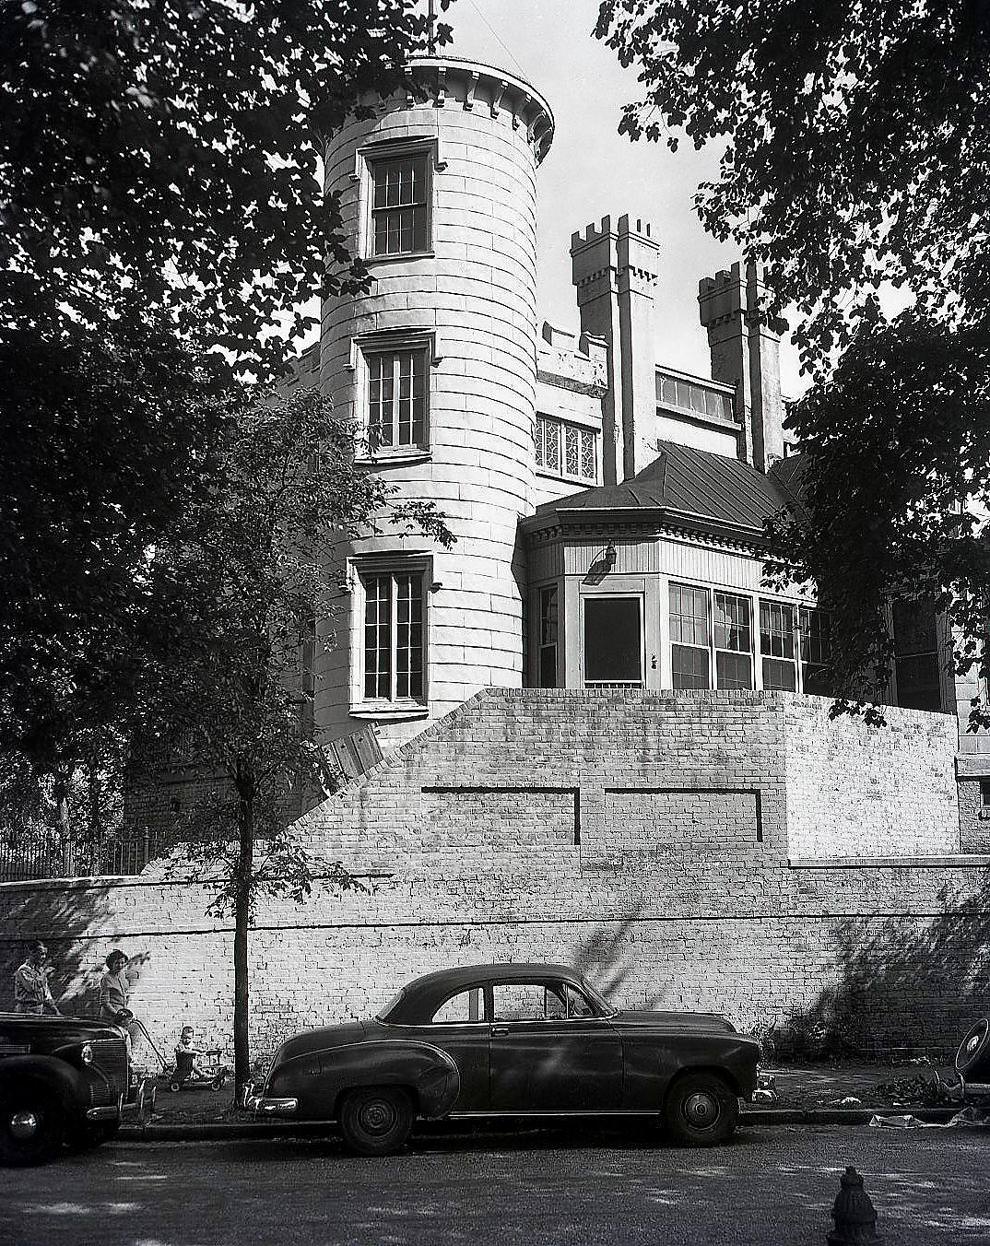 Pratt’s Castle, built as the Richmond private home of William Abbott Pratt in the 1850s.